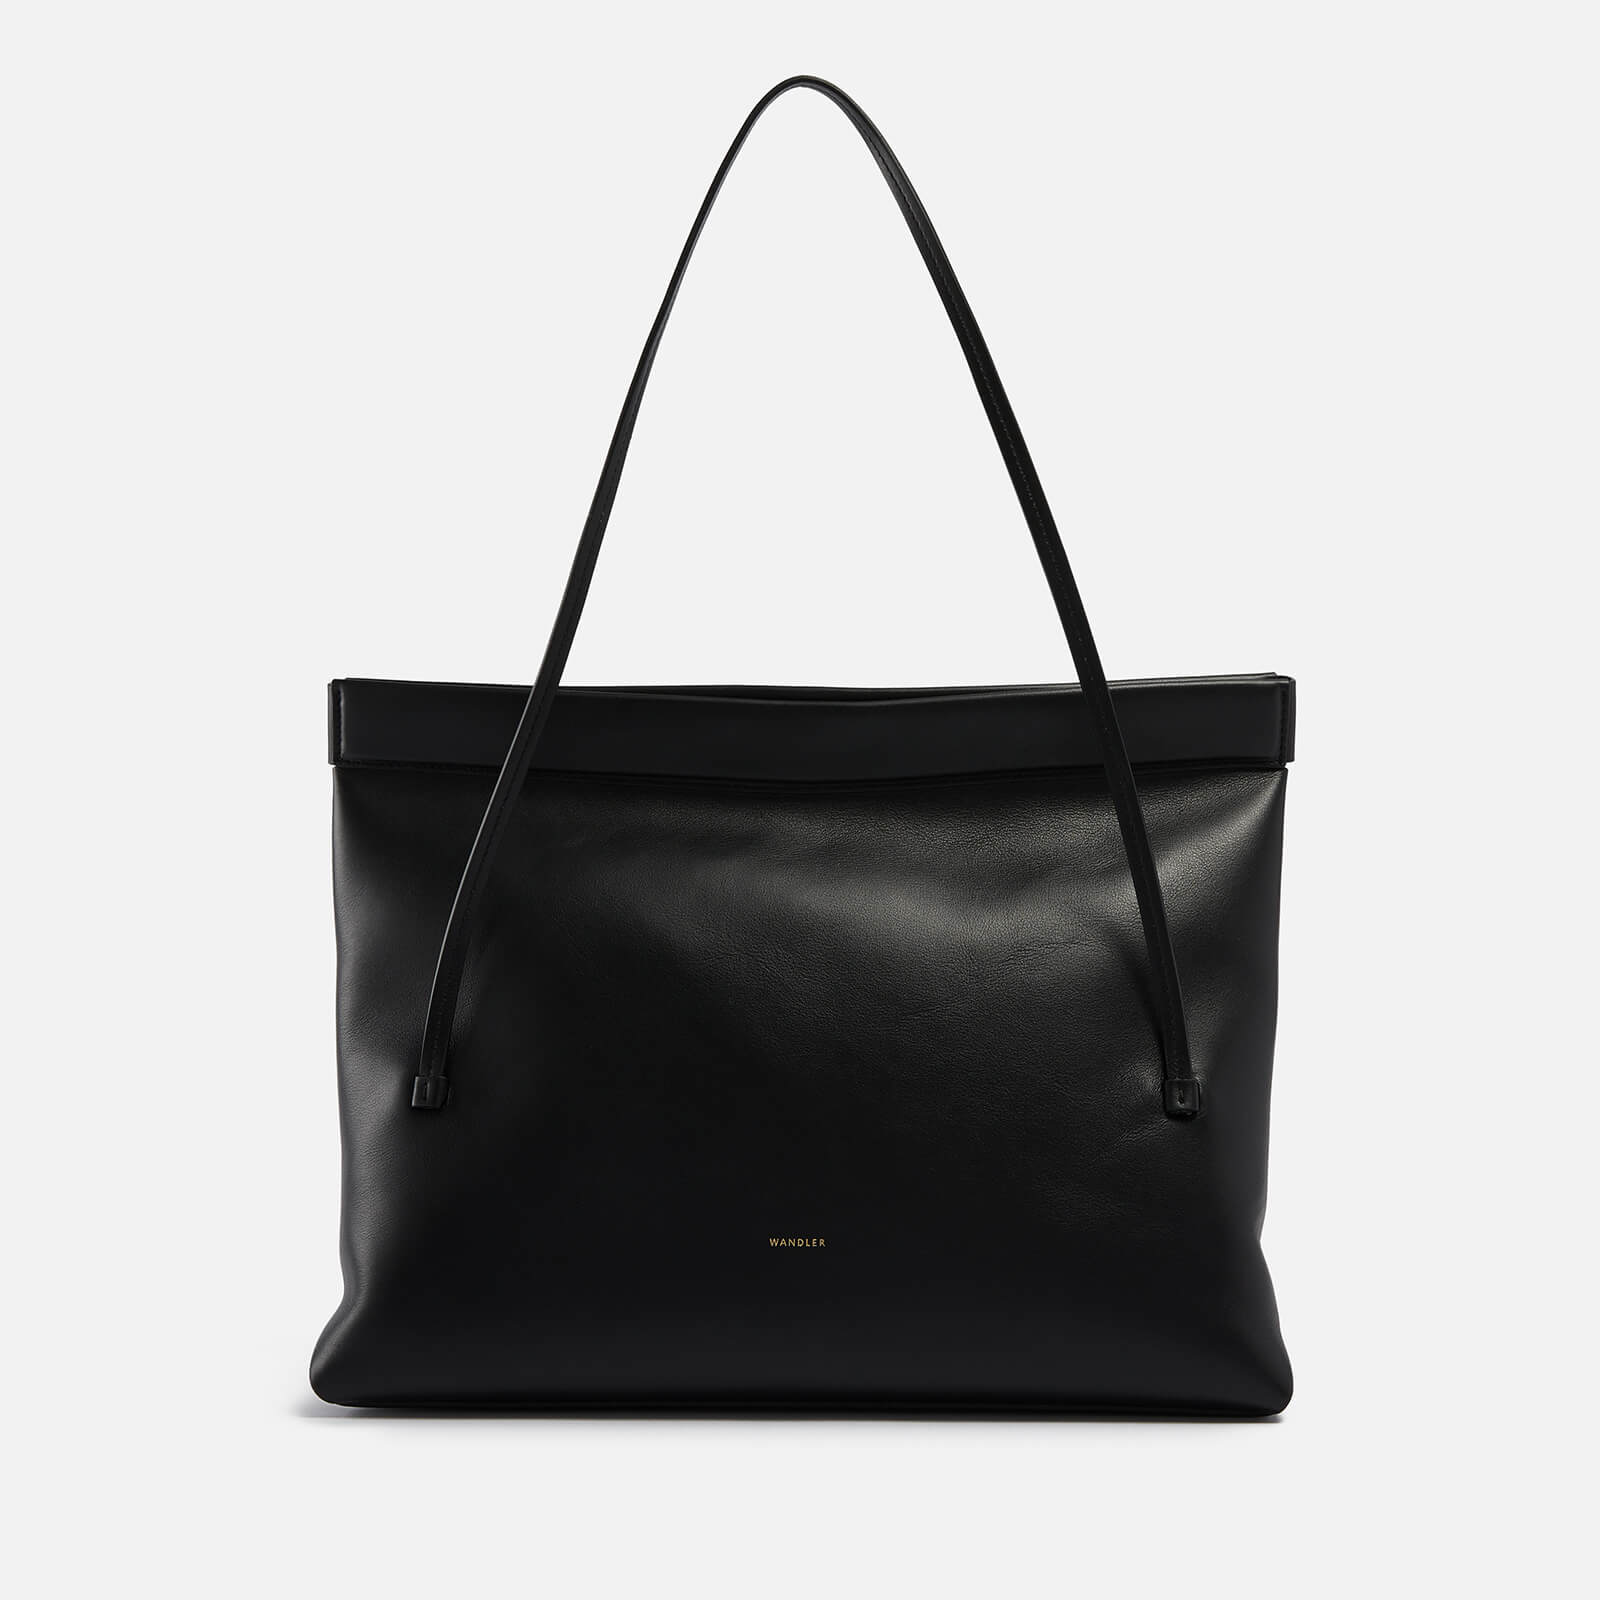 Wandler Medium Joanna Leather Bag